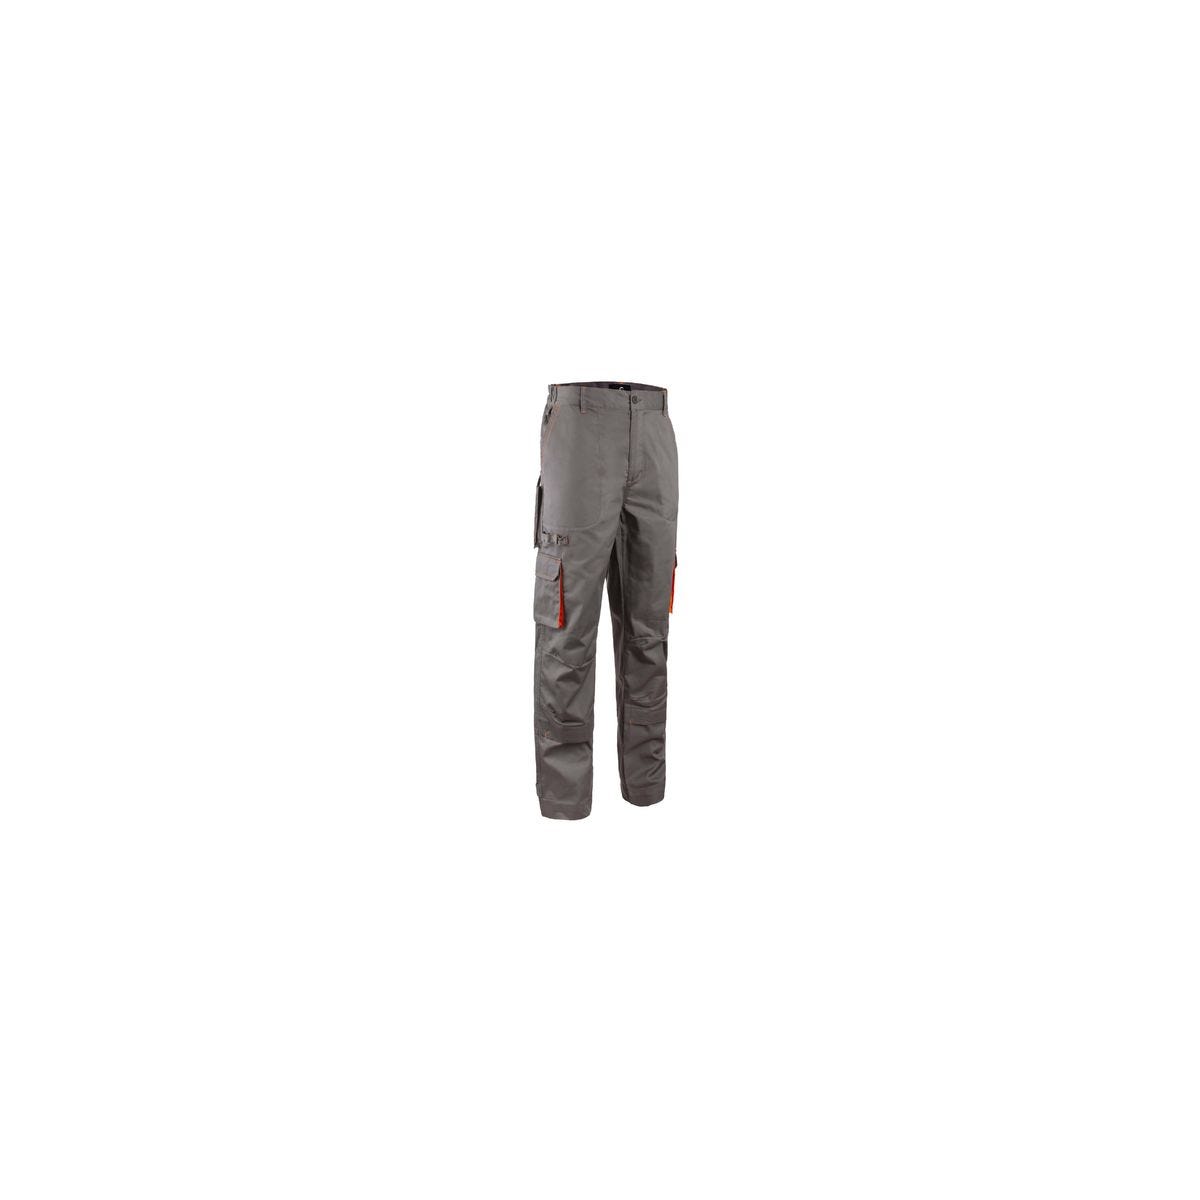 Pantalon PADDOCK II gris/orange - COVERGUARD - Taille S 0